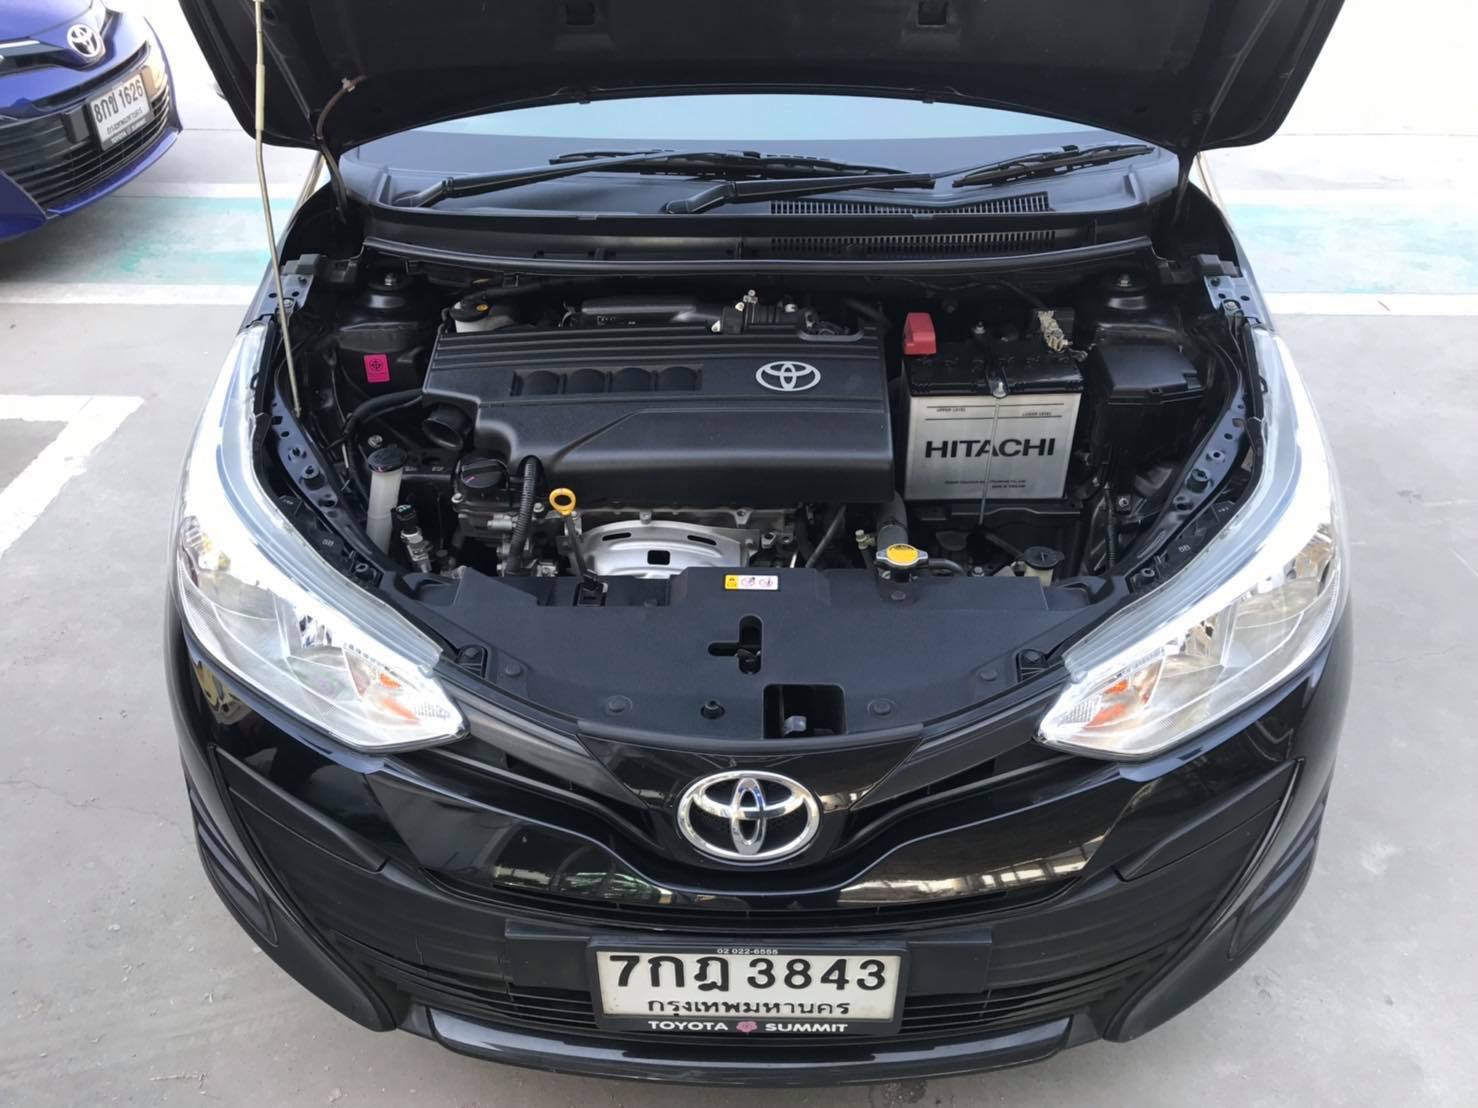 Toyota Yaris Ativ ปี 2017 สีดำ